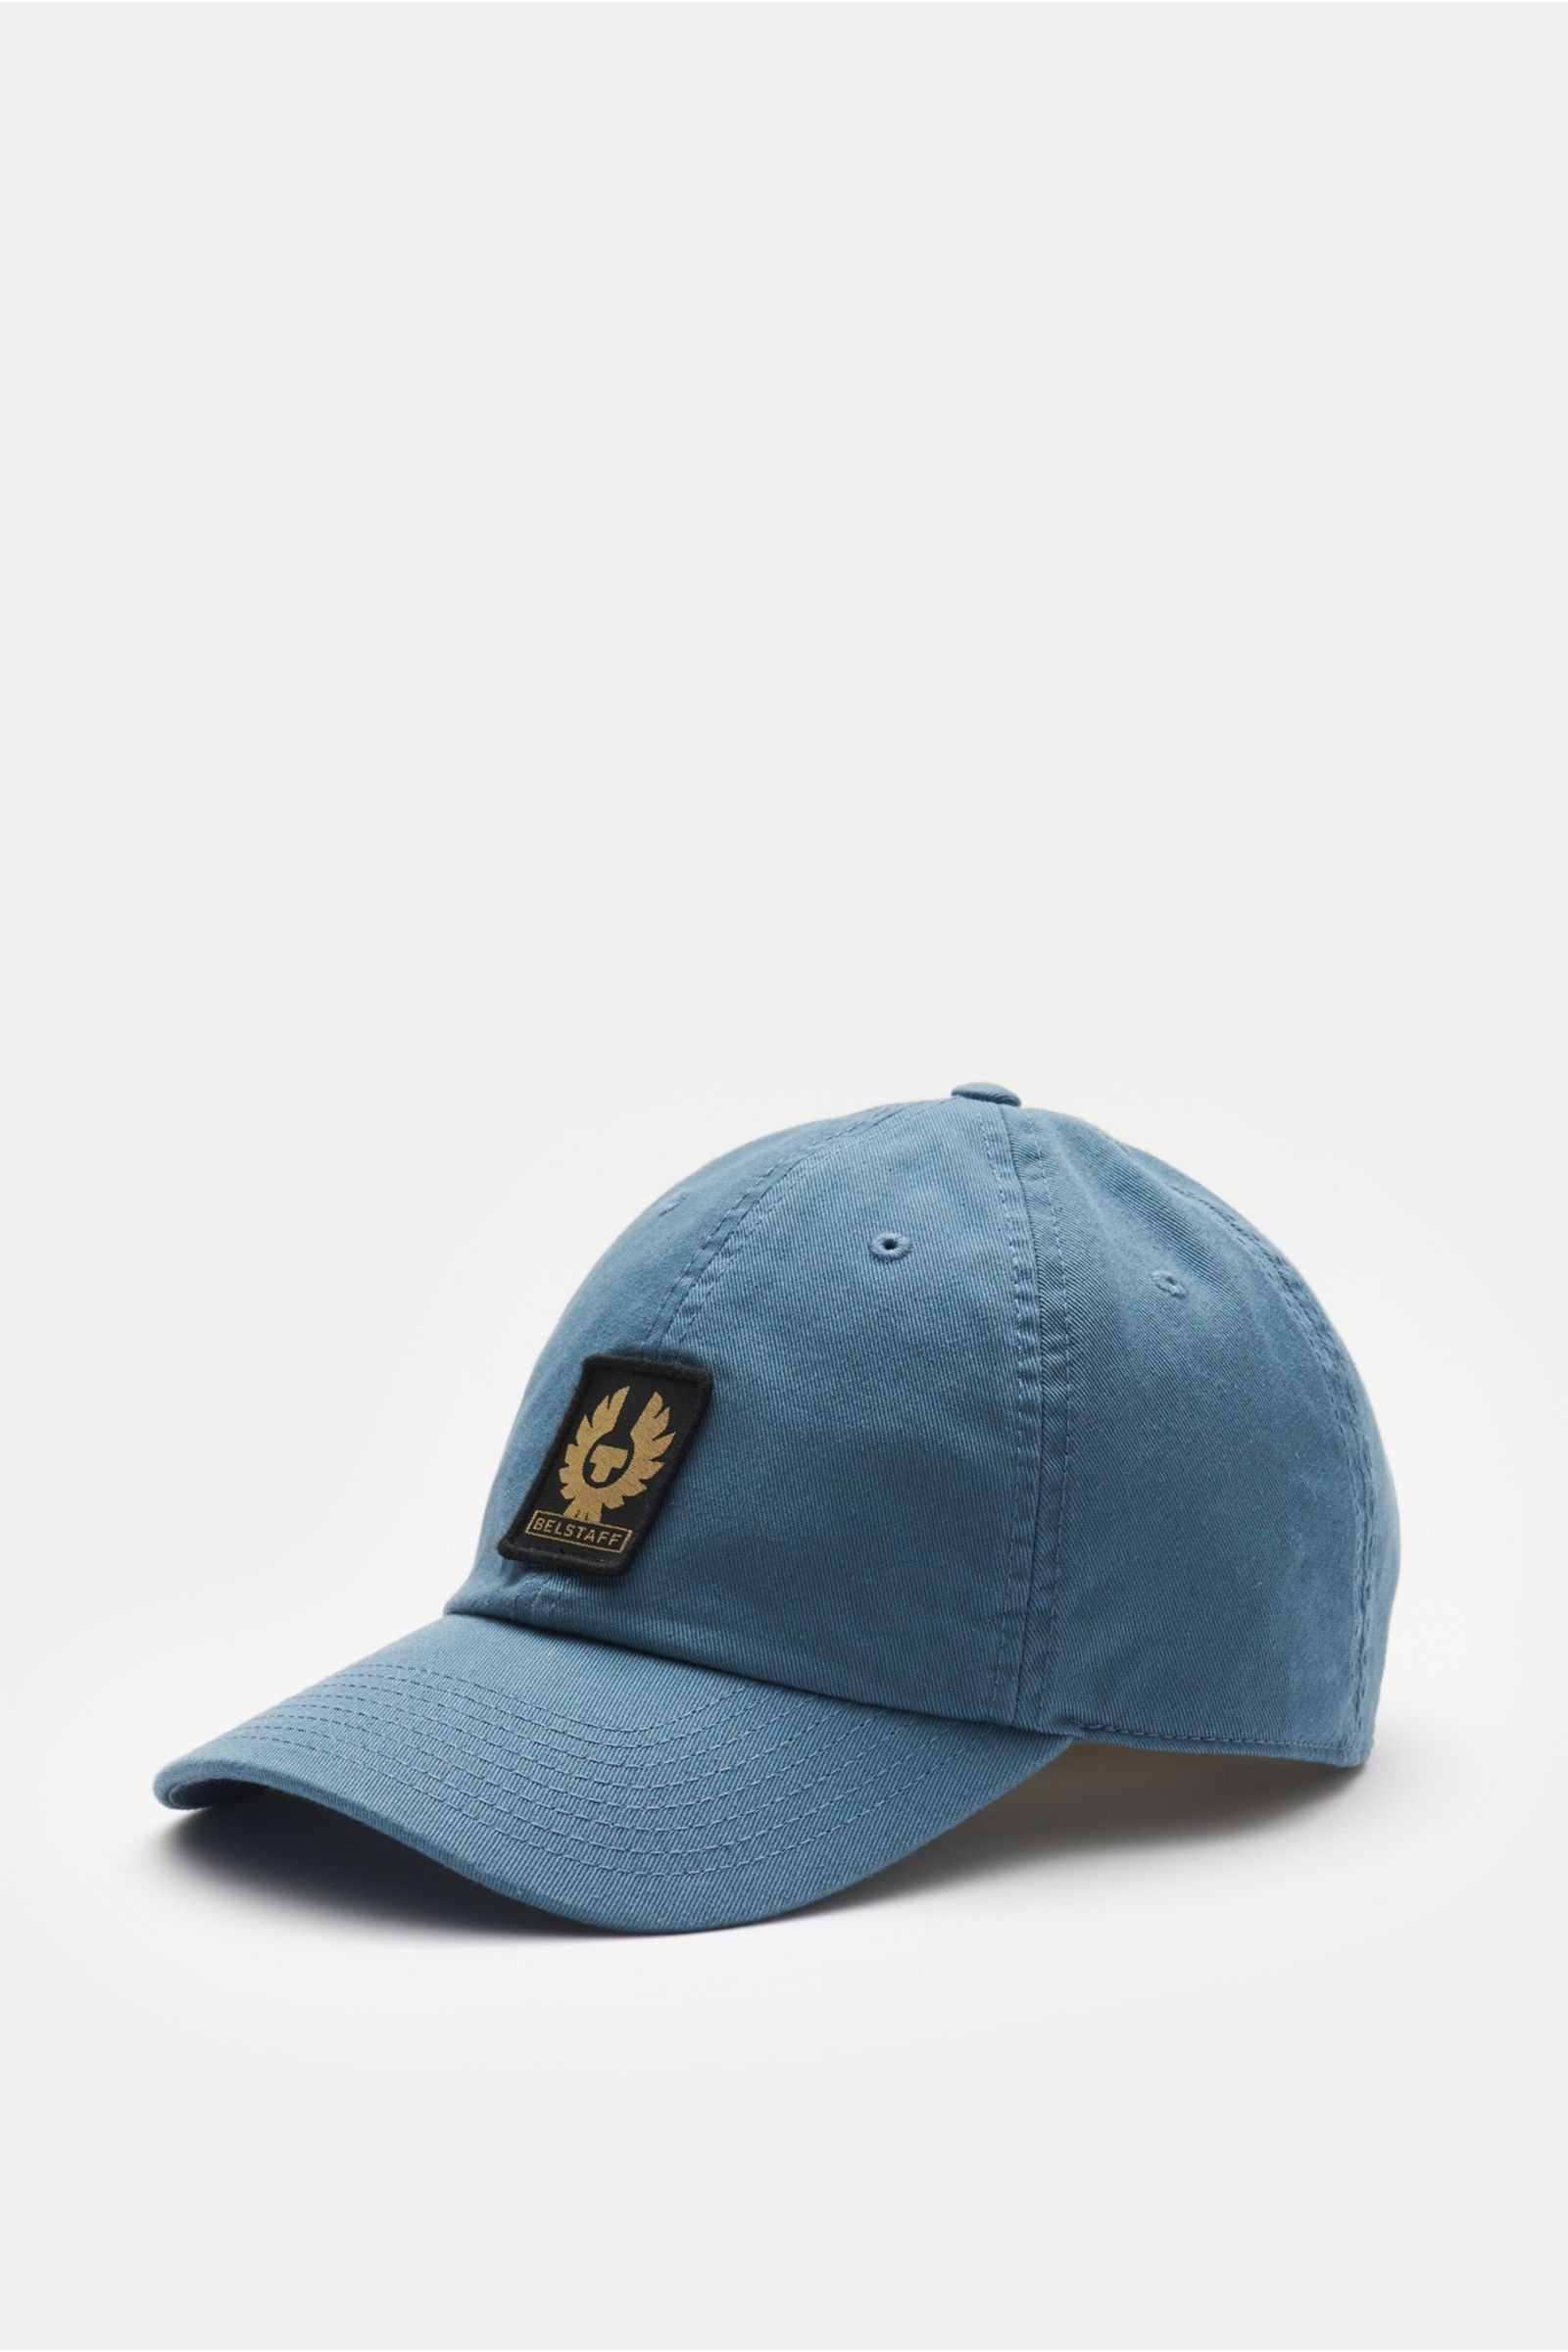 Baseball cap smoky blue